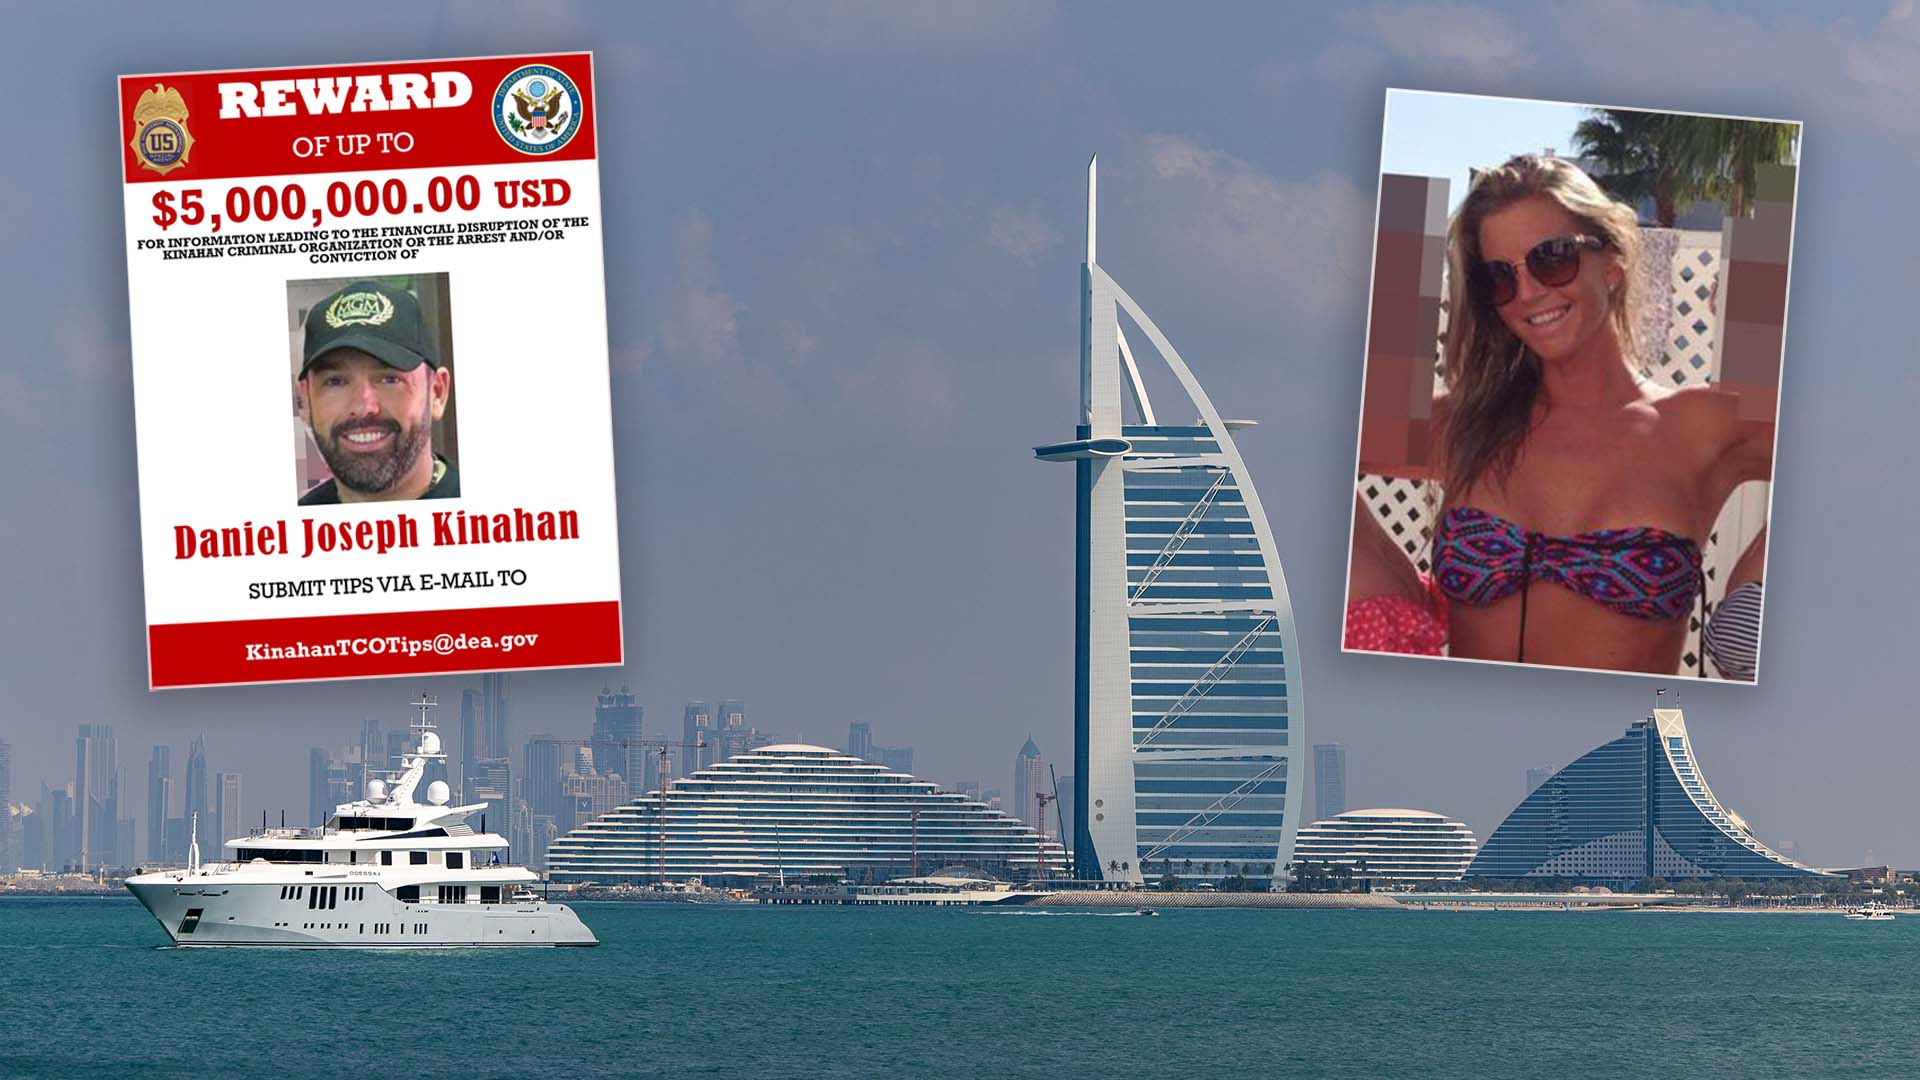 Dubai property portfolio calls into question effectiveness of sanctions on Kinahan cartel leader, experts say